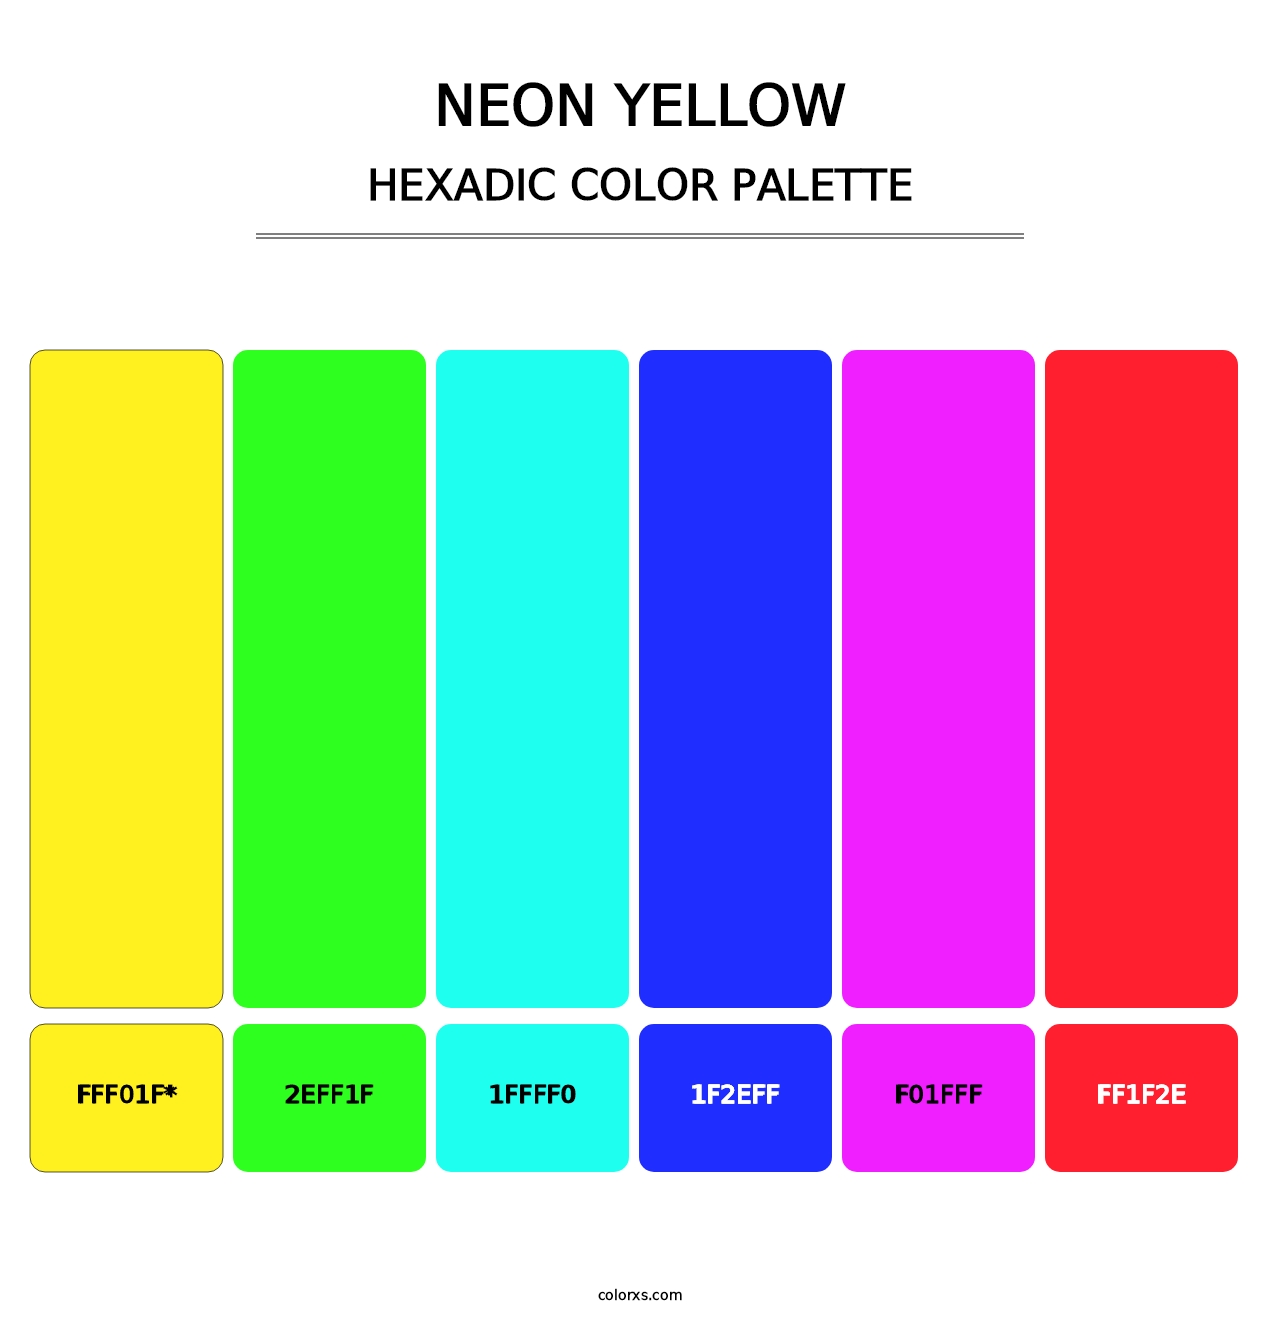 Neon Yellow - Hexadic Color Palette